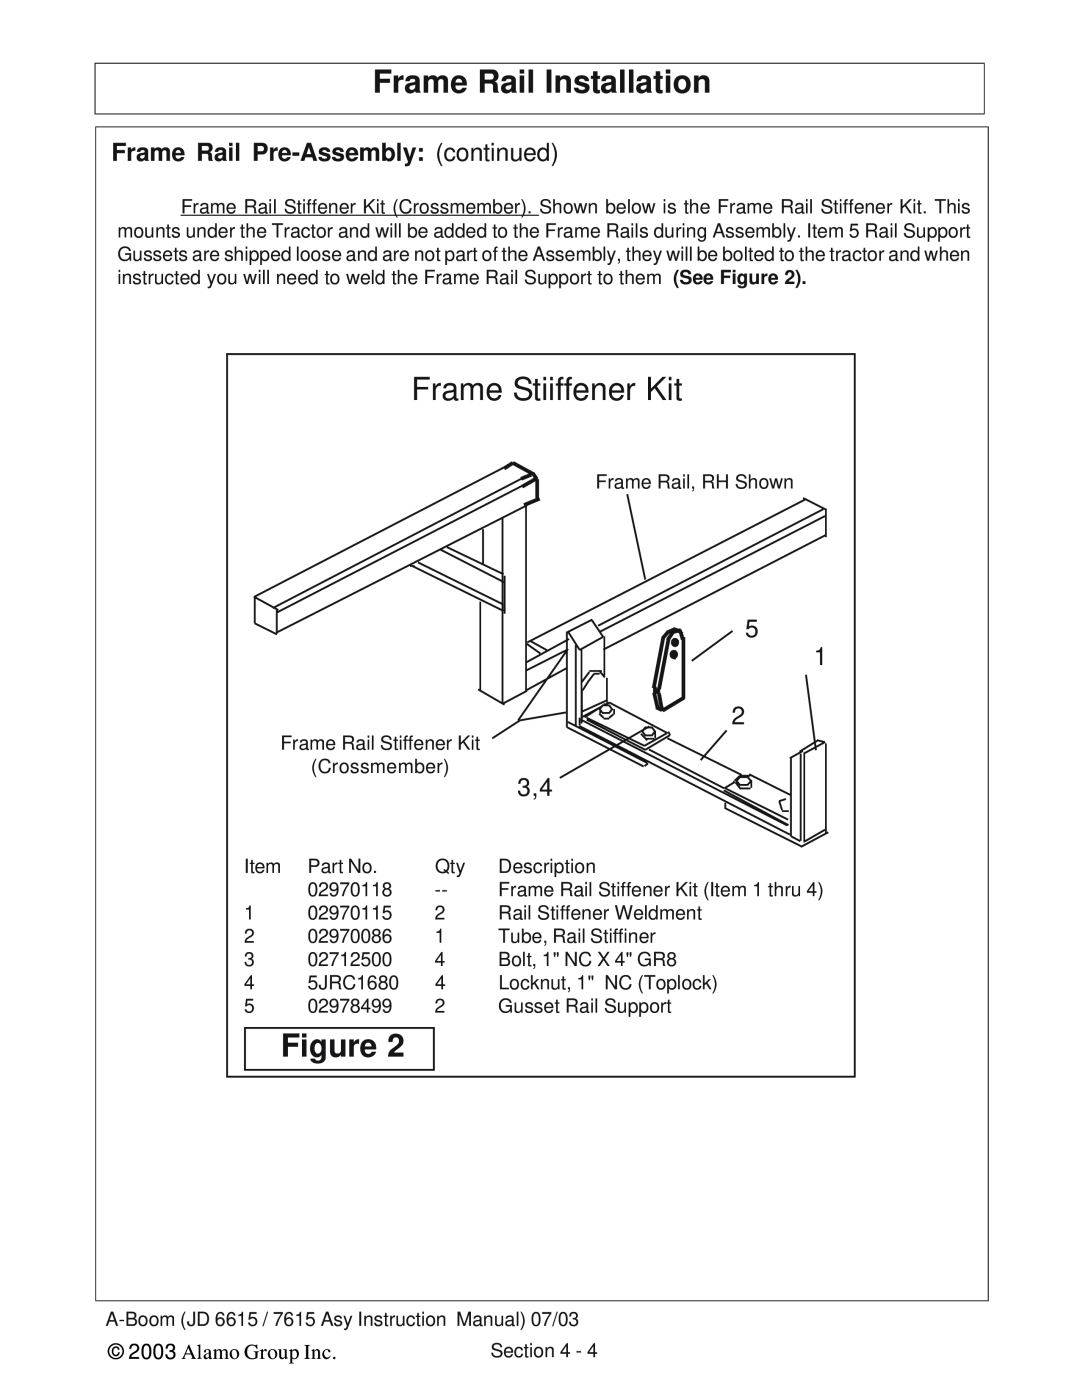 Alamo DSEB-D16 Frame Stiiffener Kit, Frame Rail Installation, Frame Rail Pre-Assembly continued, Alamo Group Inc 